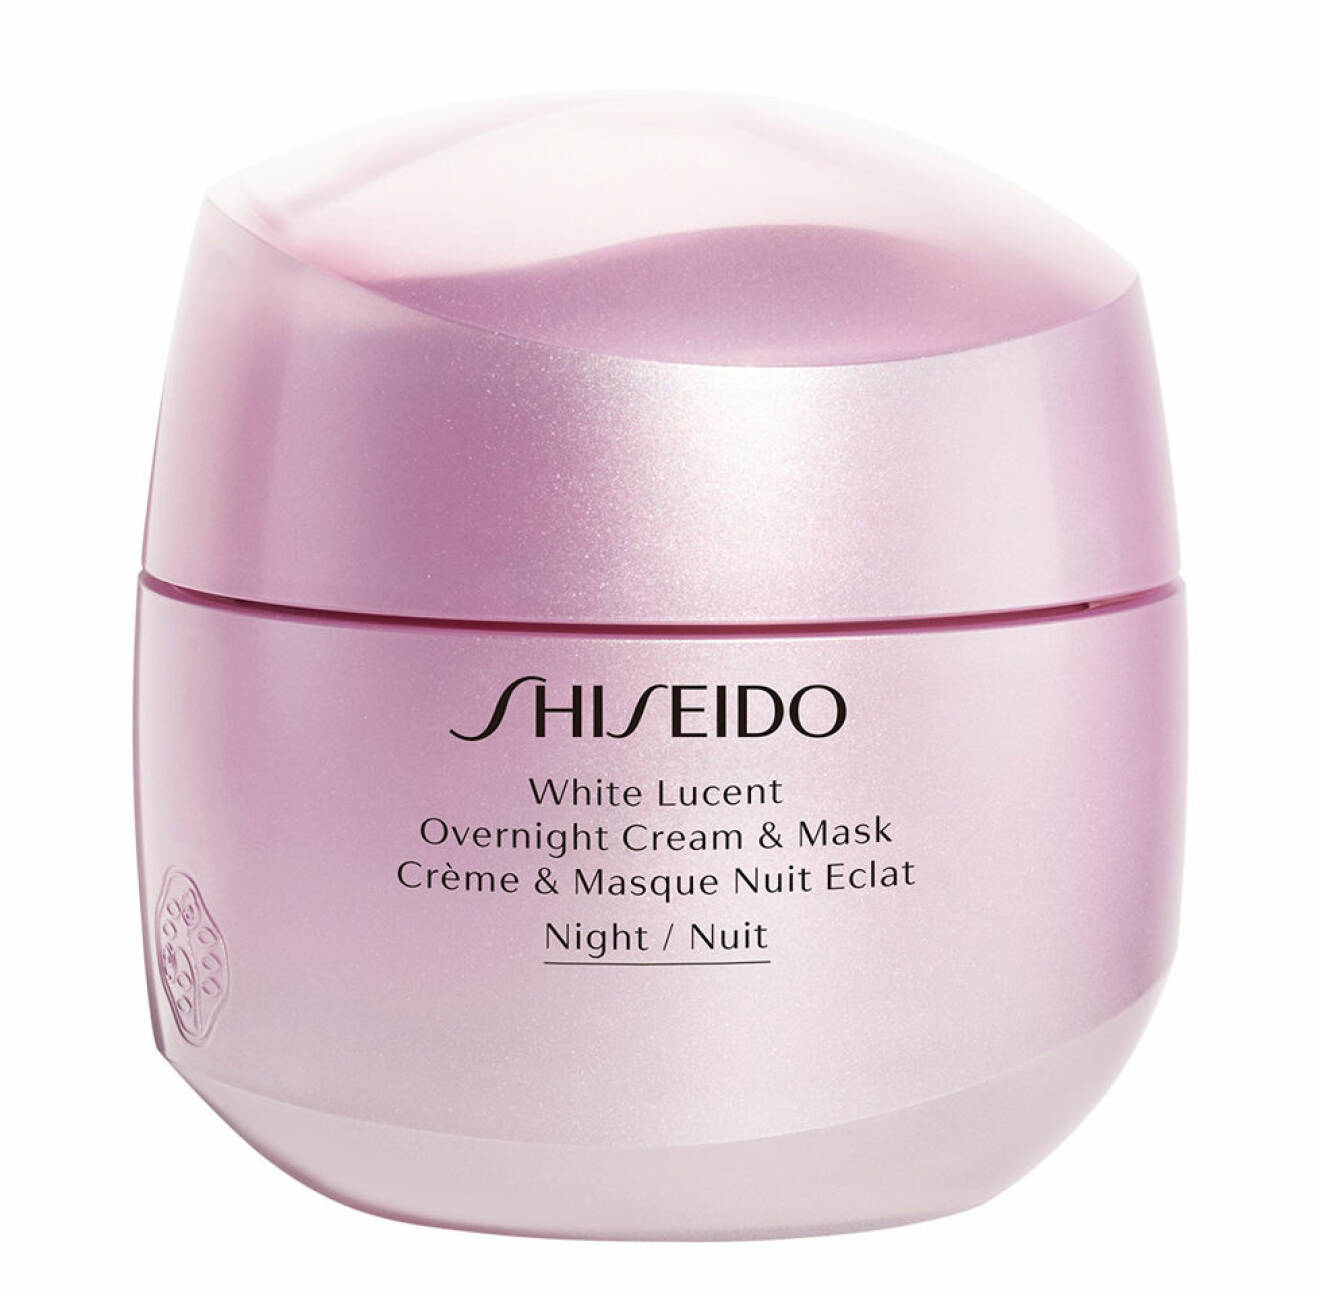 Shiseido White lucent overnight cream and mask.